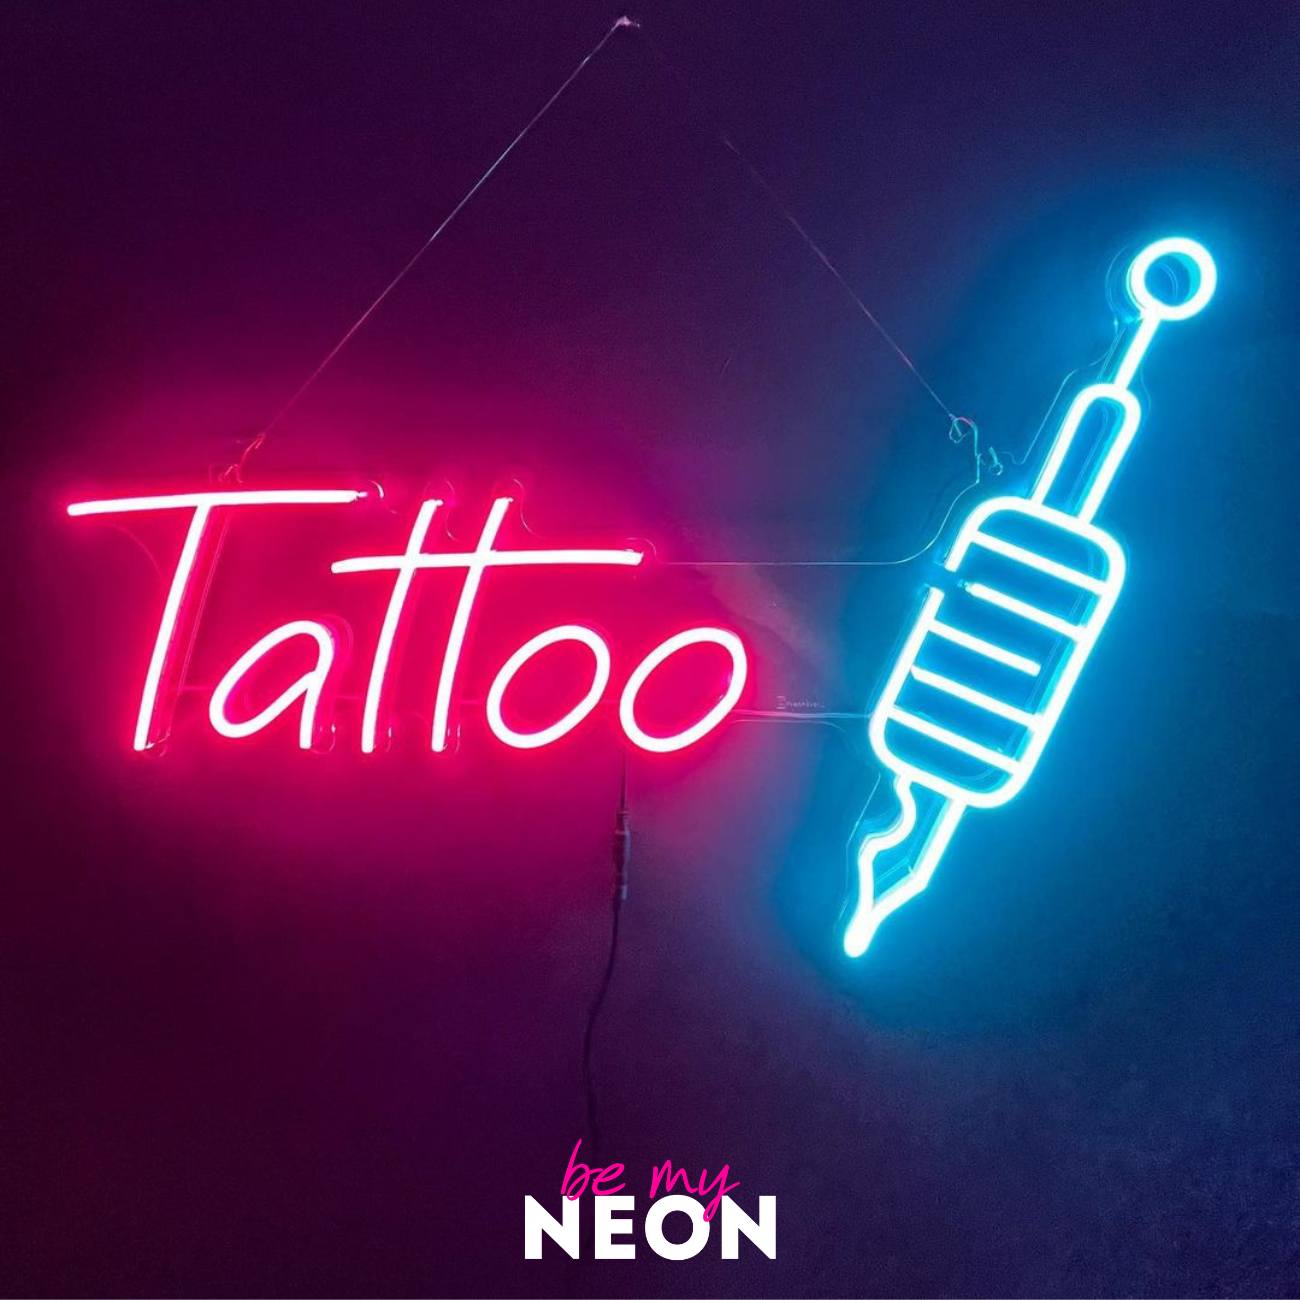 "Tattoo Nadel" LED Neonschild